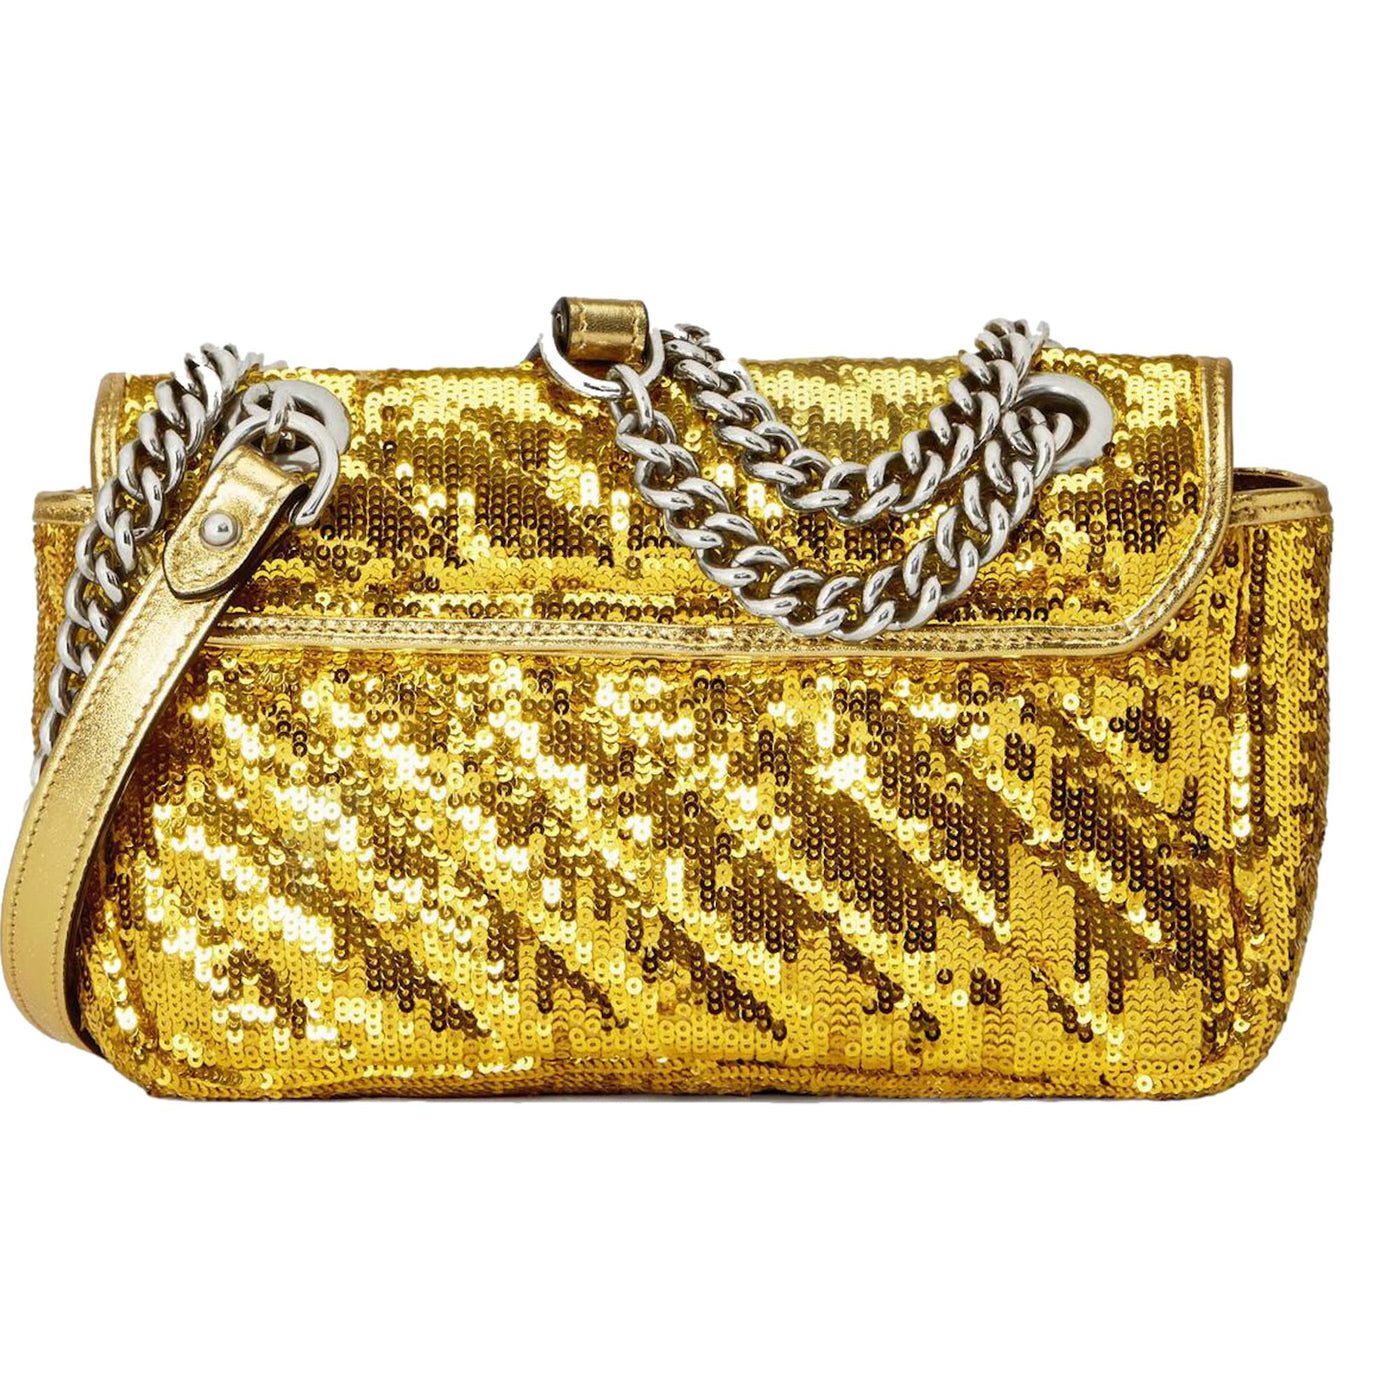 Gucci Flap Marmont GG Matelasse Gold Sequin Shoulder Bag 446744 - LUXURYMRKT